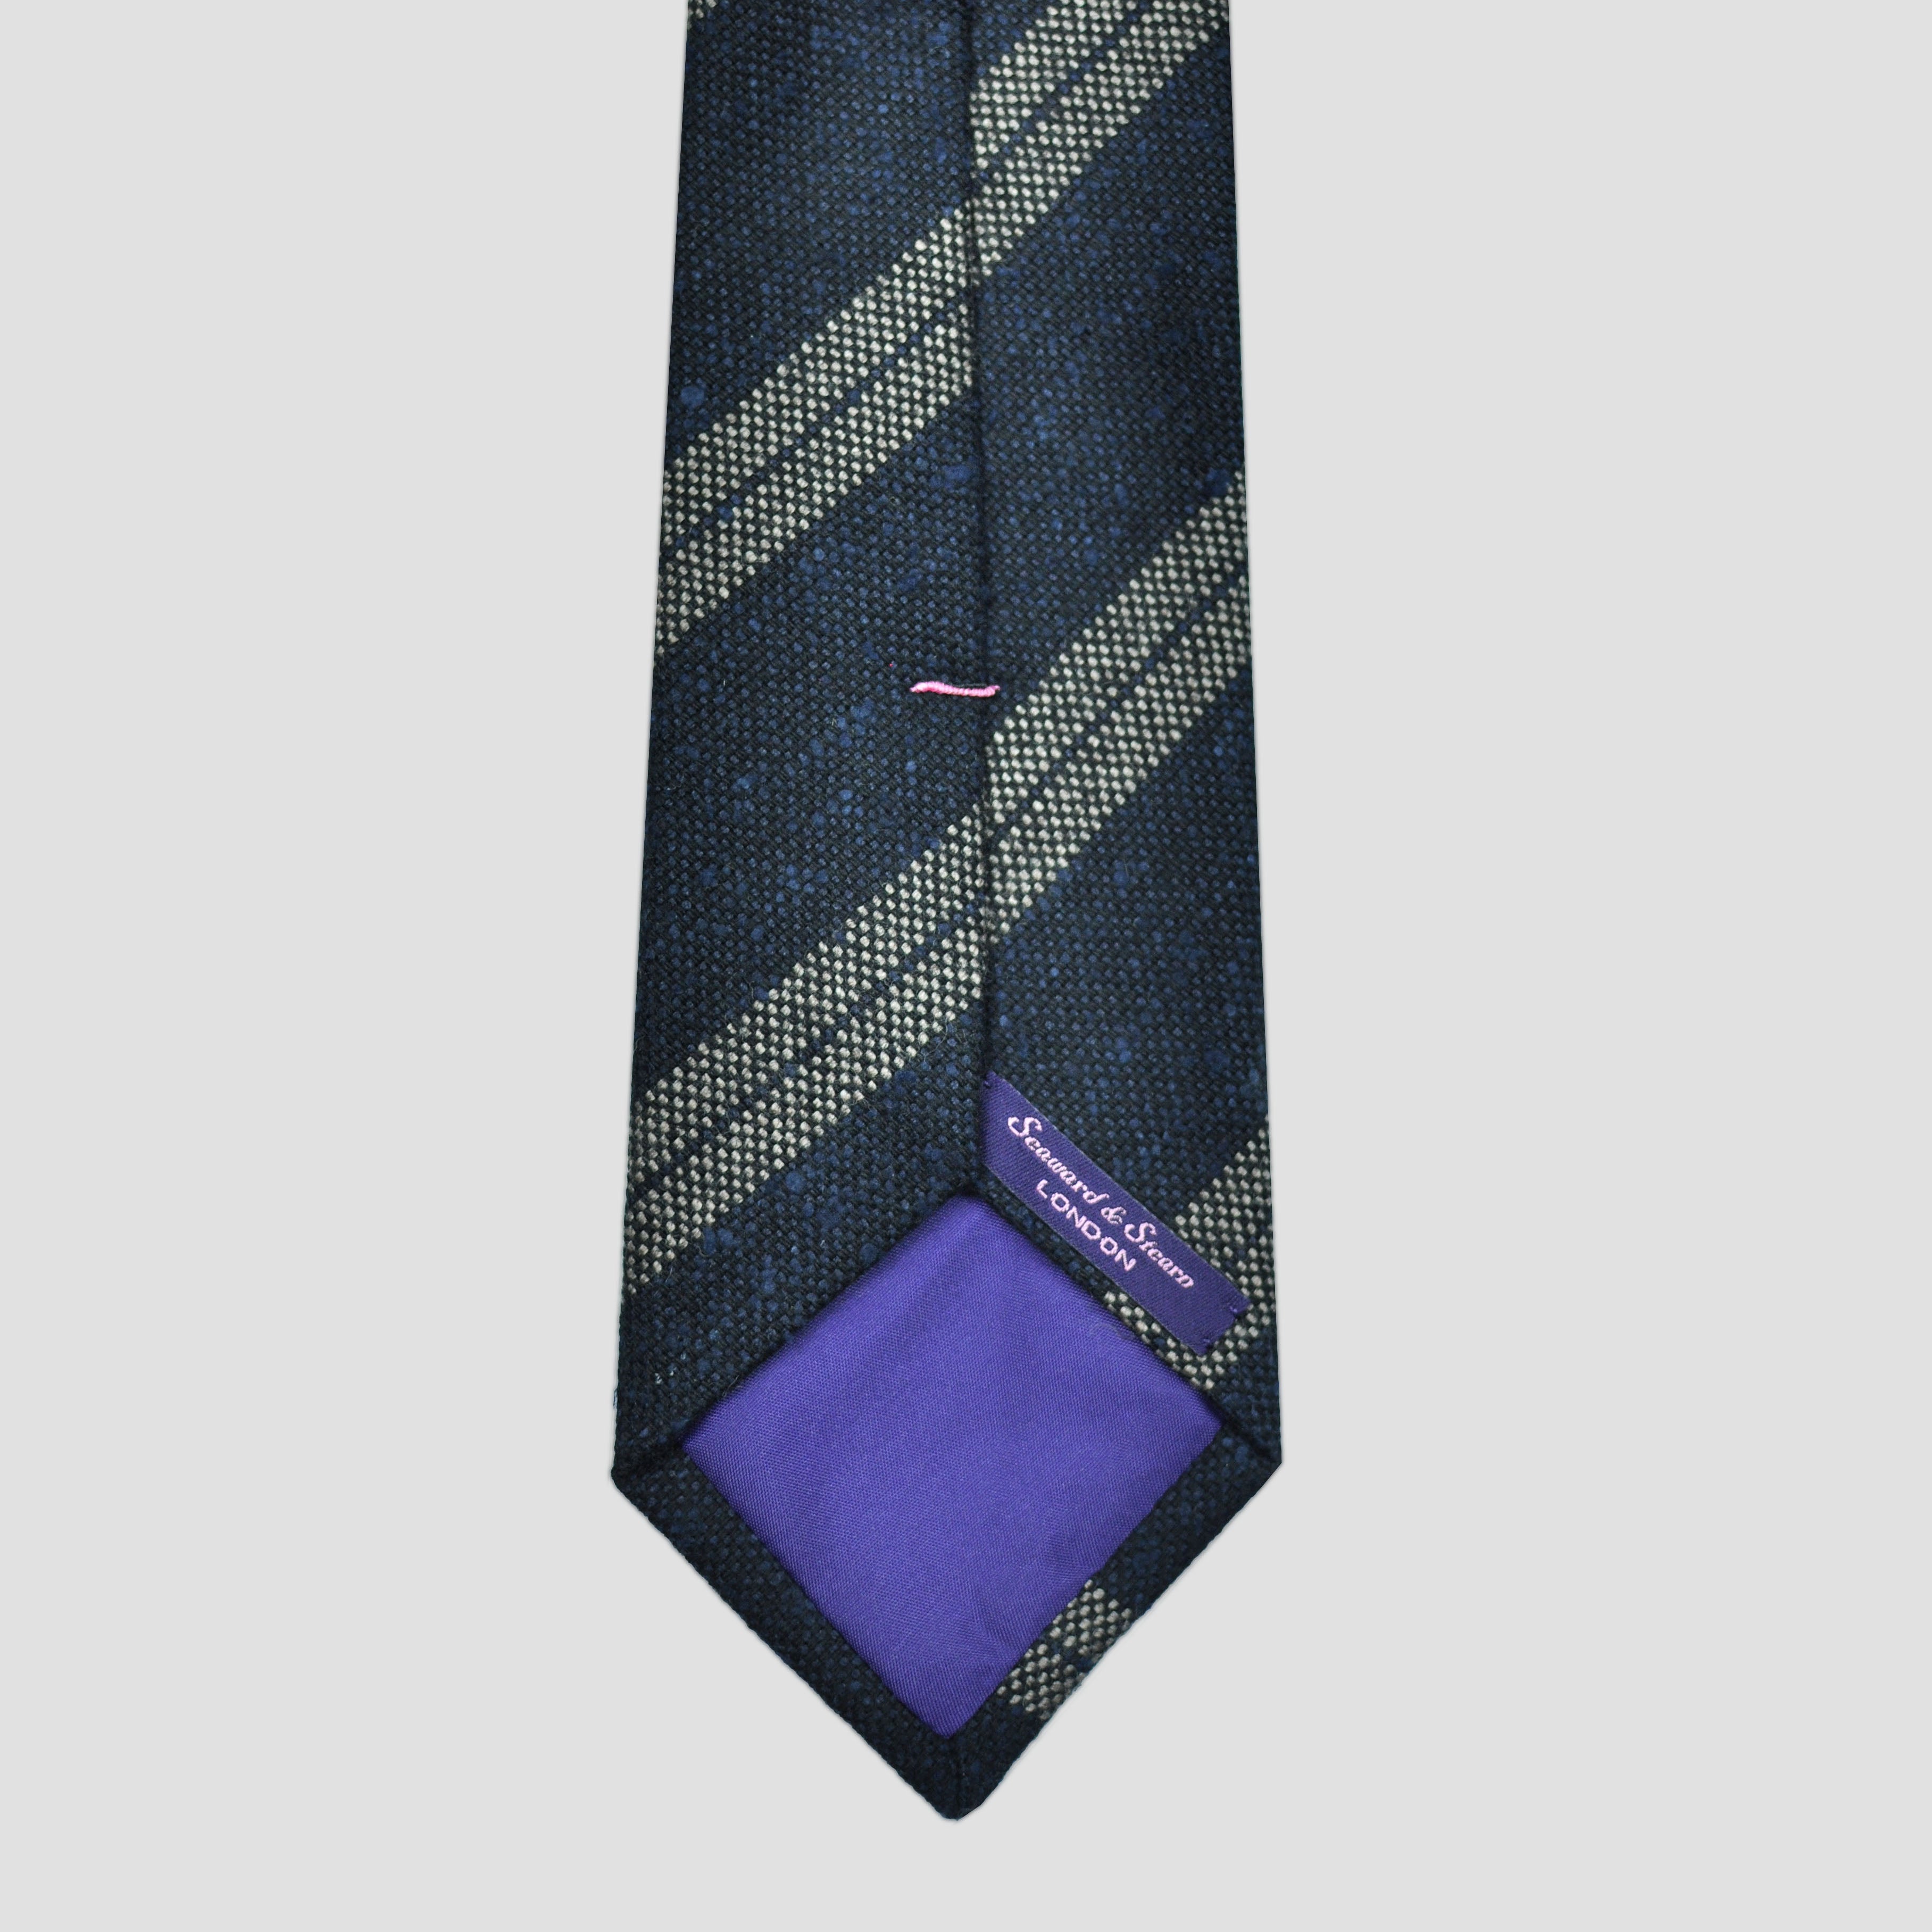 Neat Stripes Slub Wool Tie in Navy & Grey